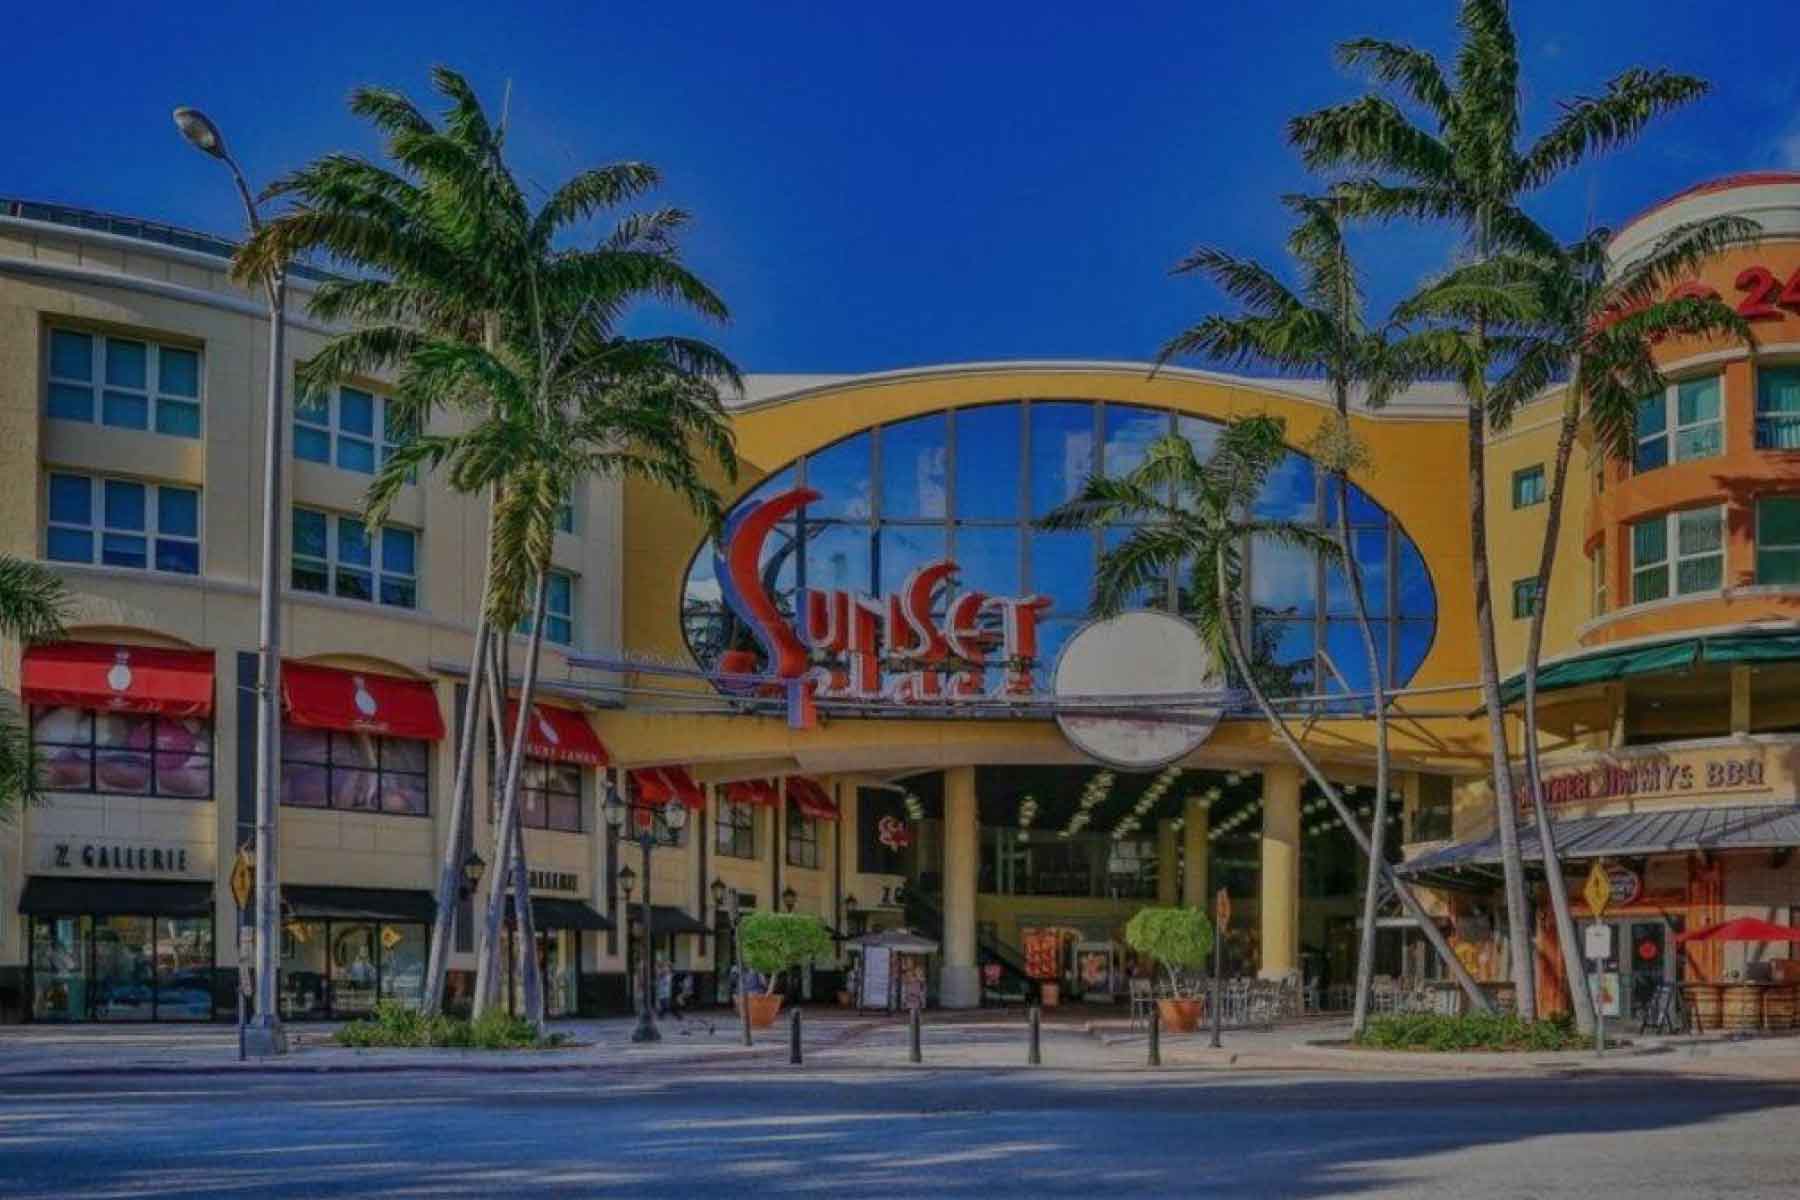 Sunset Mall 